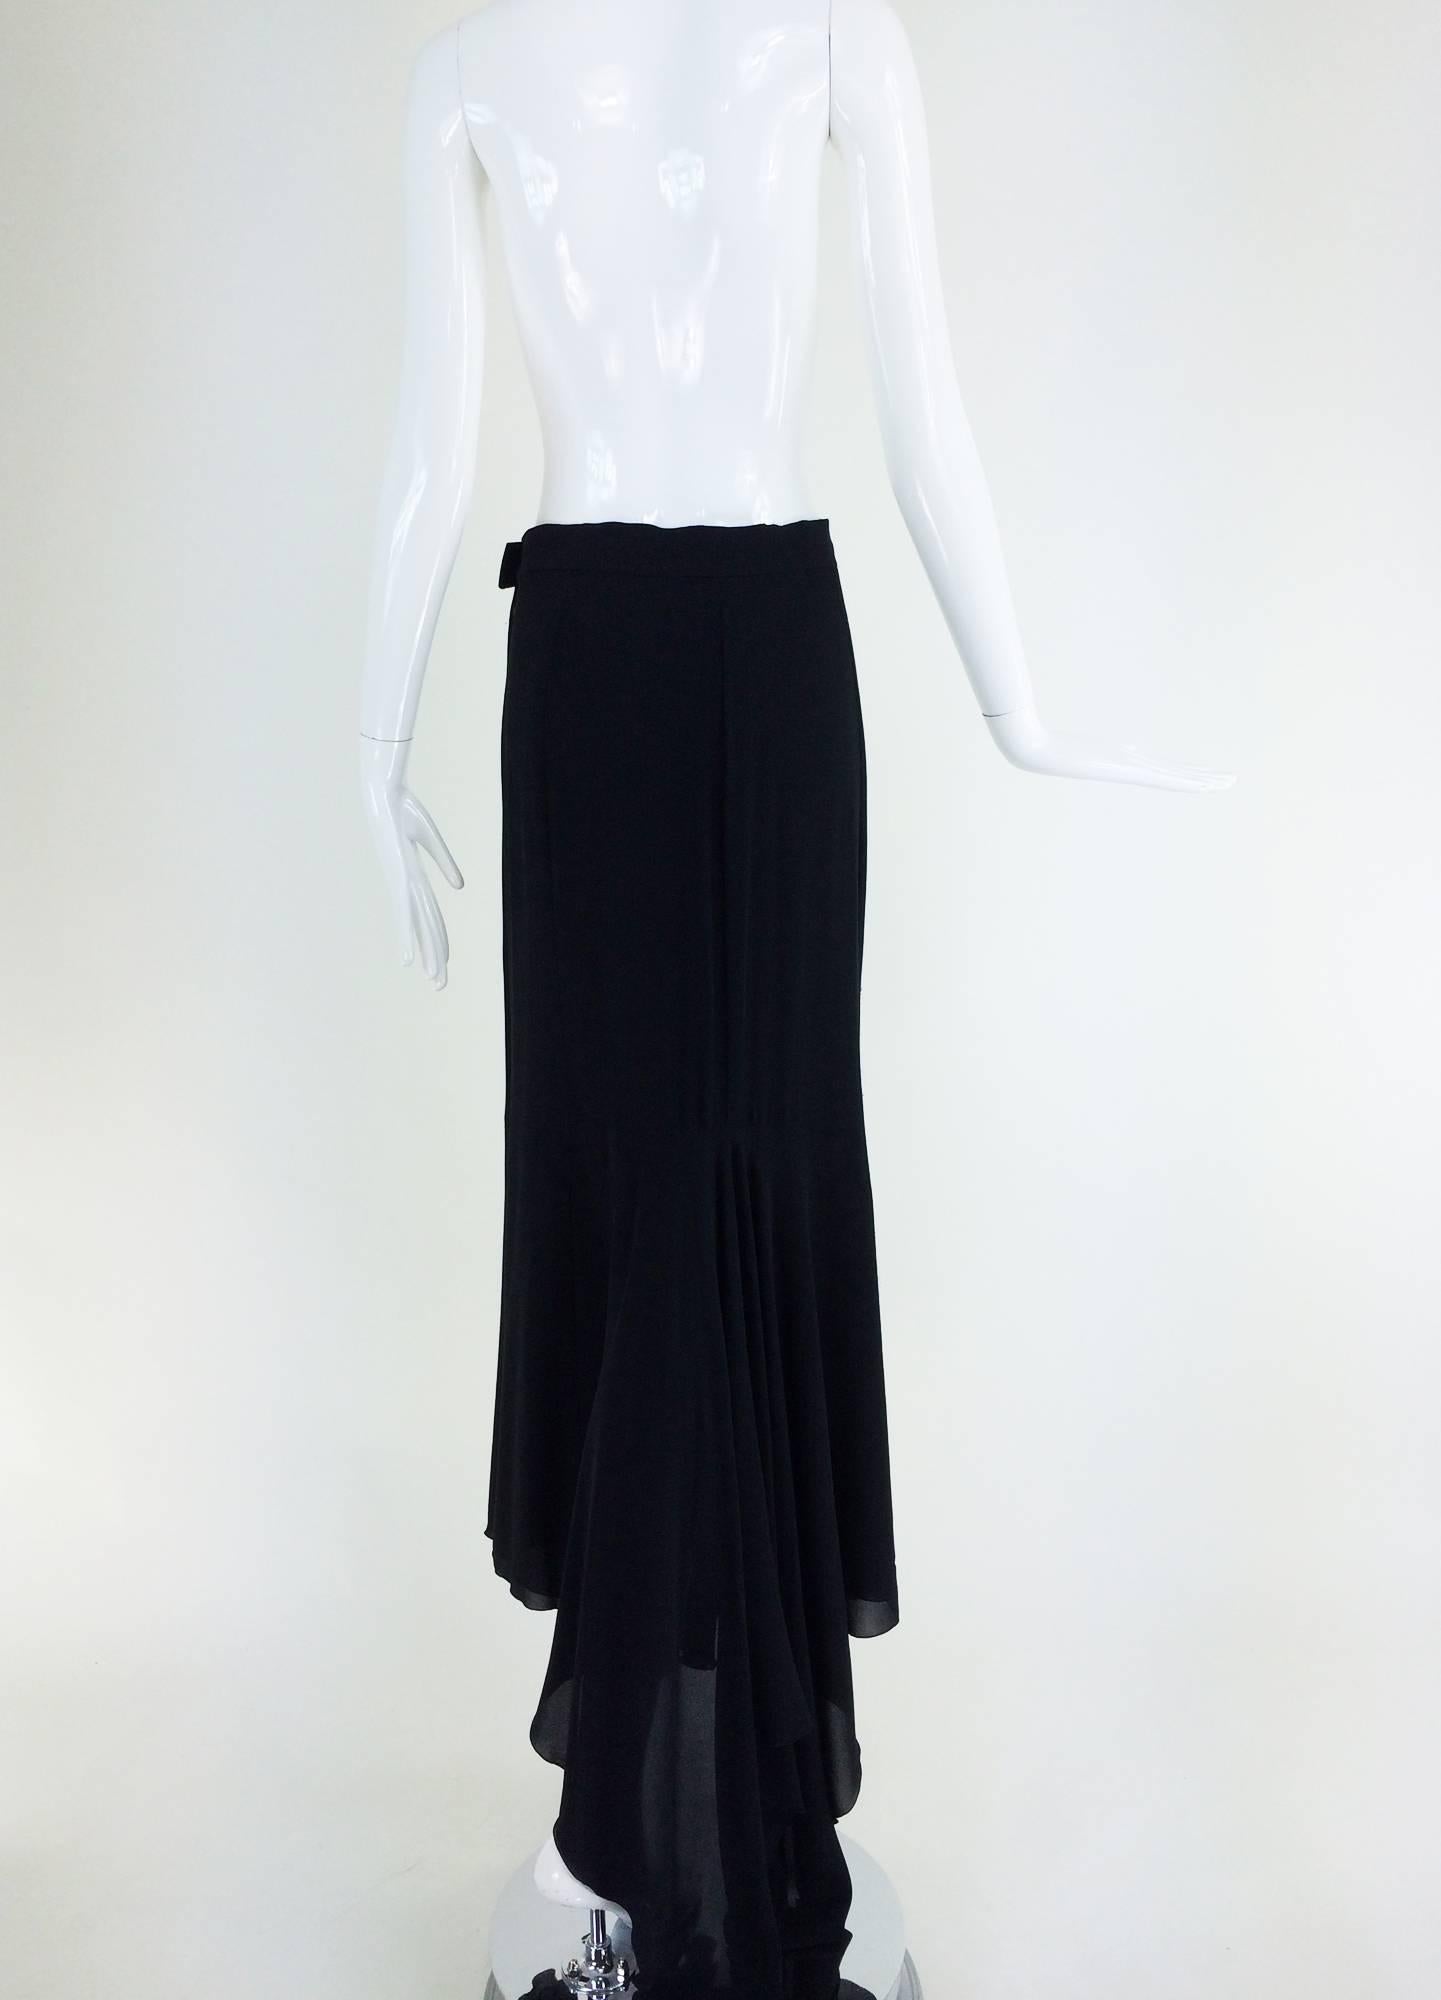 Women's Chanel black silk chiffon evening skirt with train 1990s